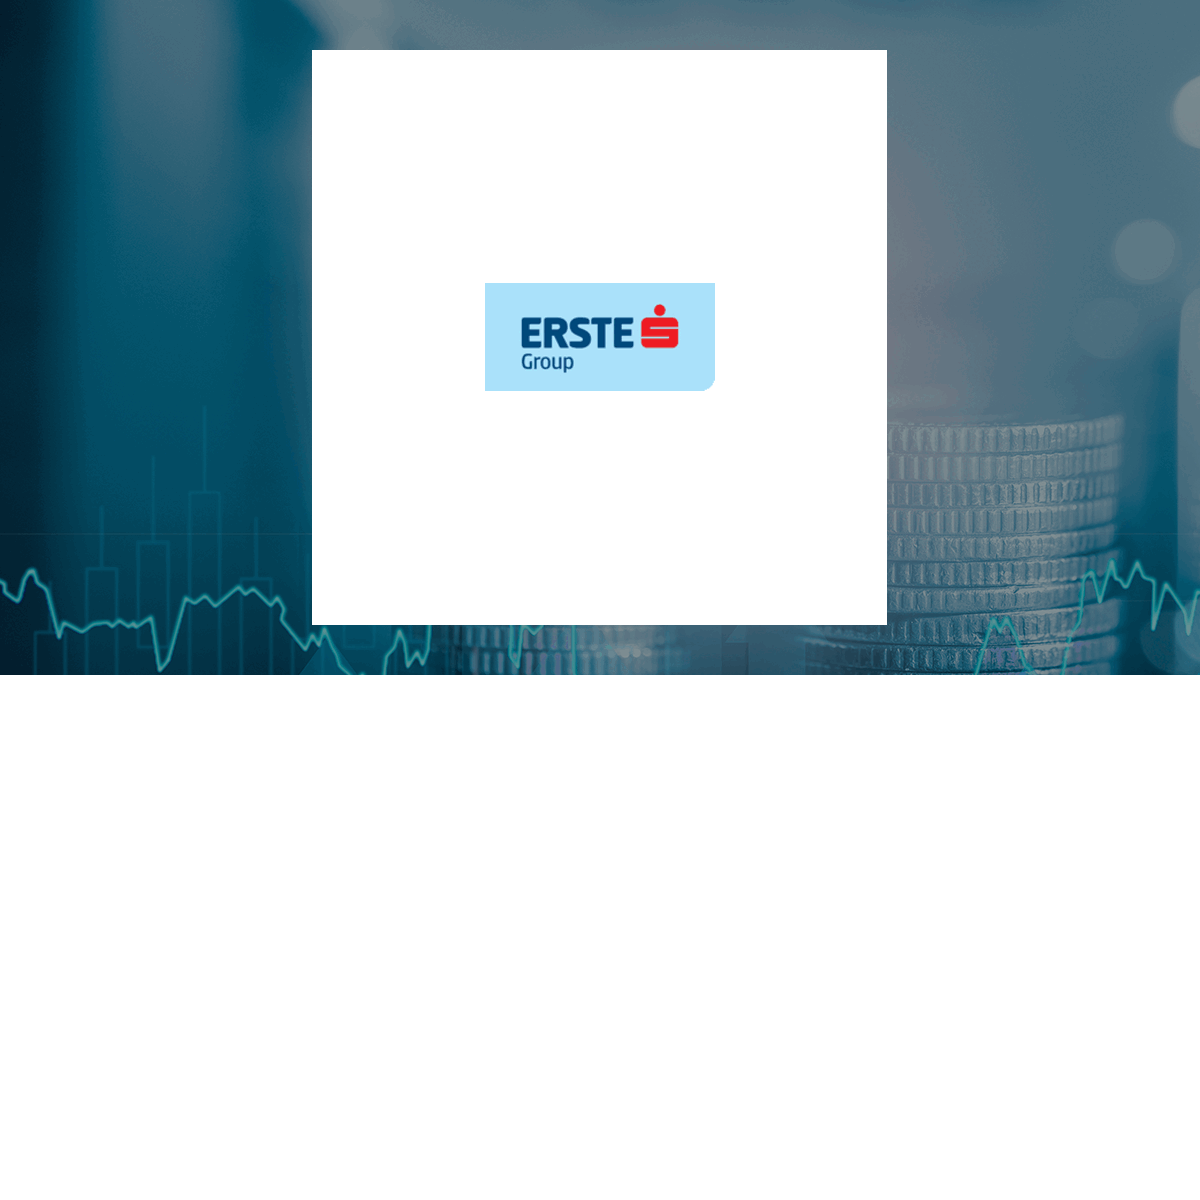 Erste Group Bank logo with Finance background